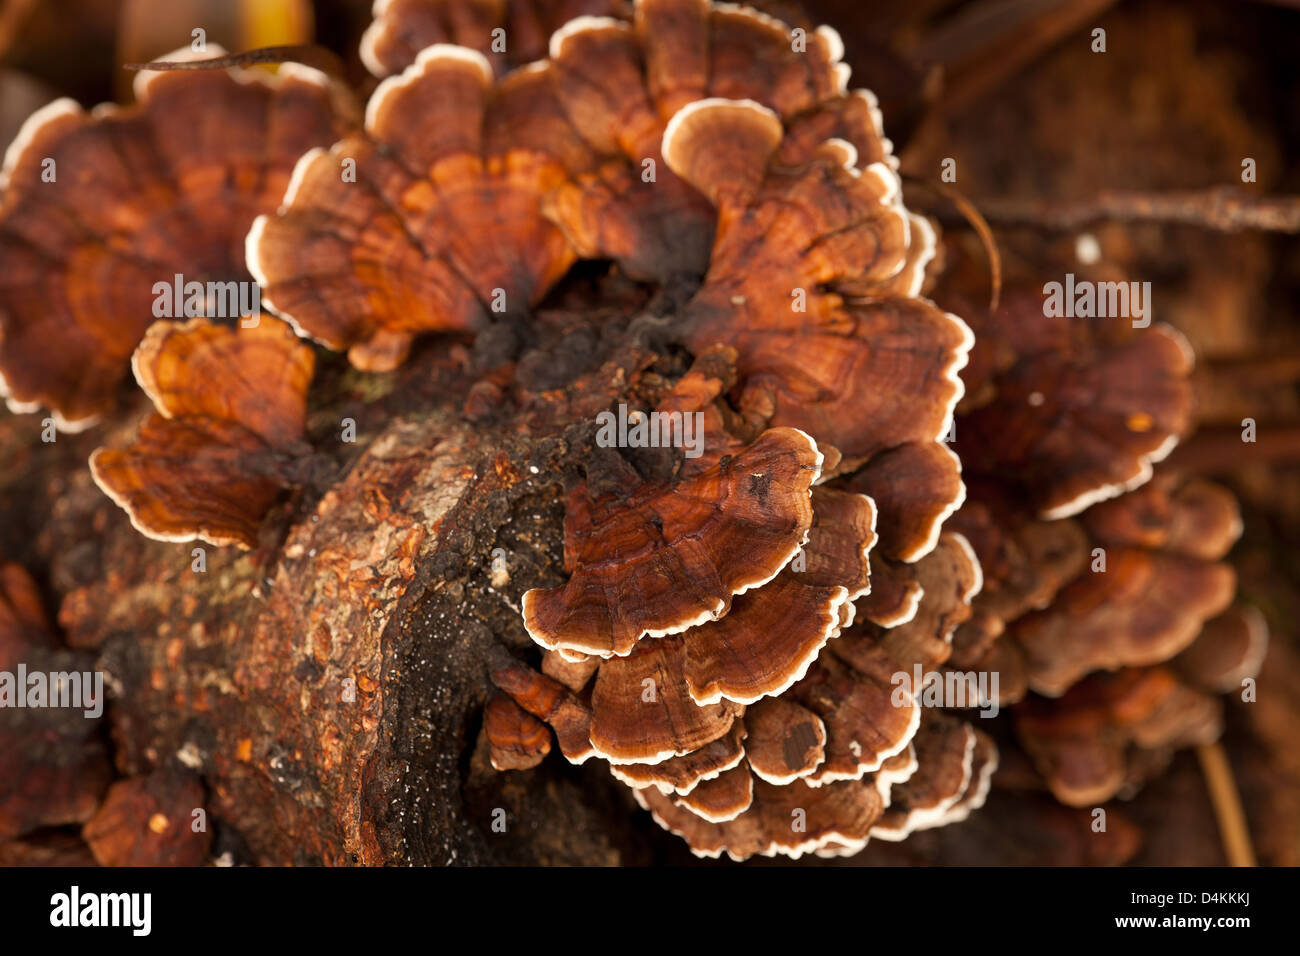 Fungi on a fallen log in La Amistad national park, Chiriqui province, Republic of Panama. Stock Photo